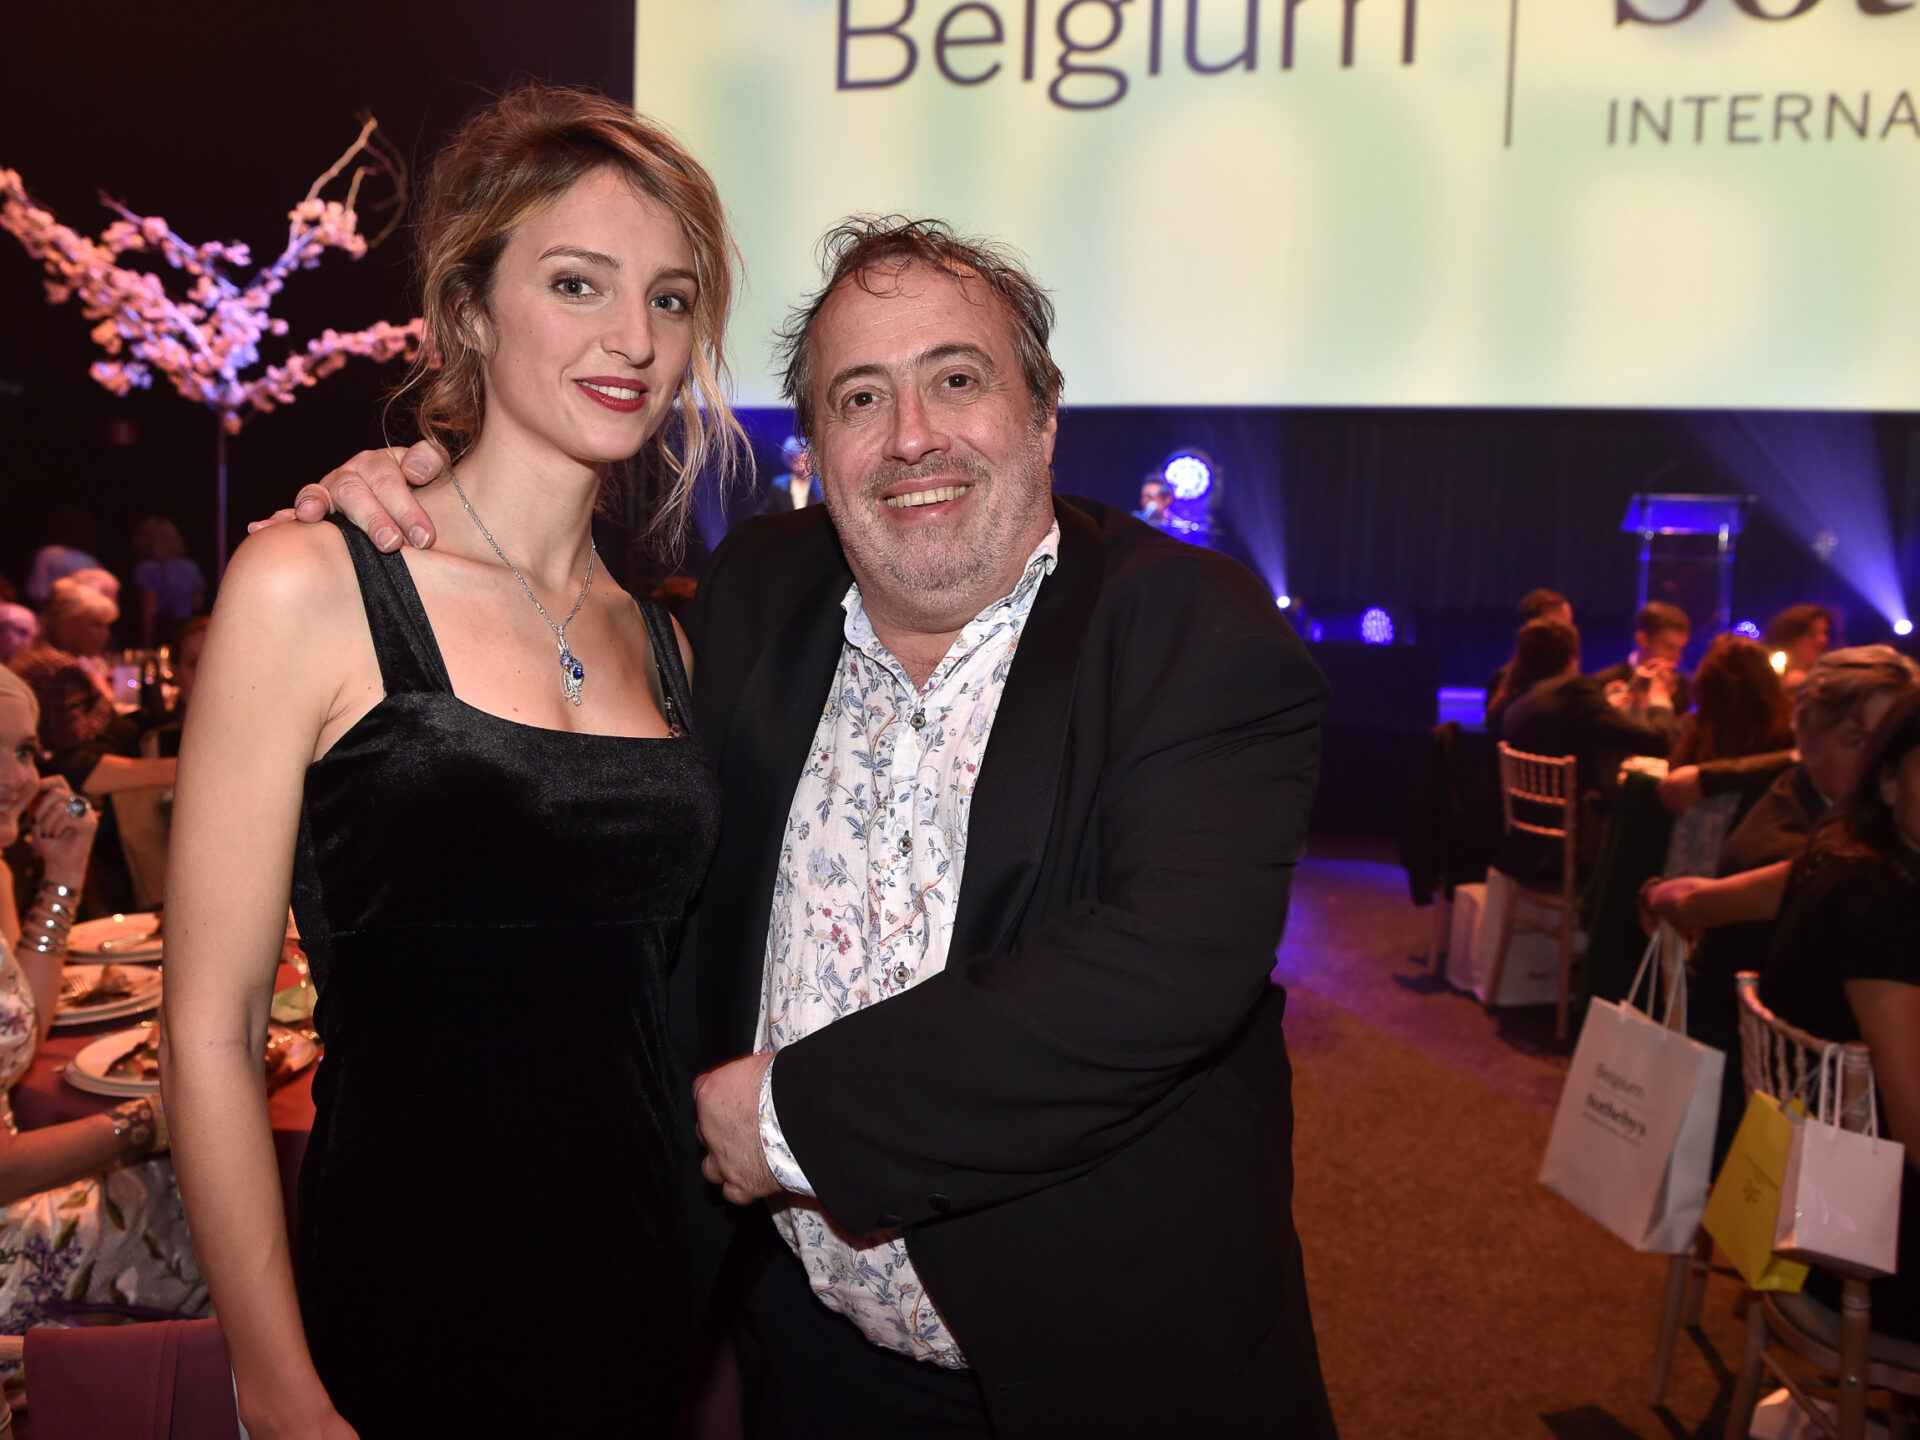 Belgium Sothebys Int. Realty Hope for Bordet Gala II